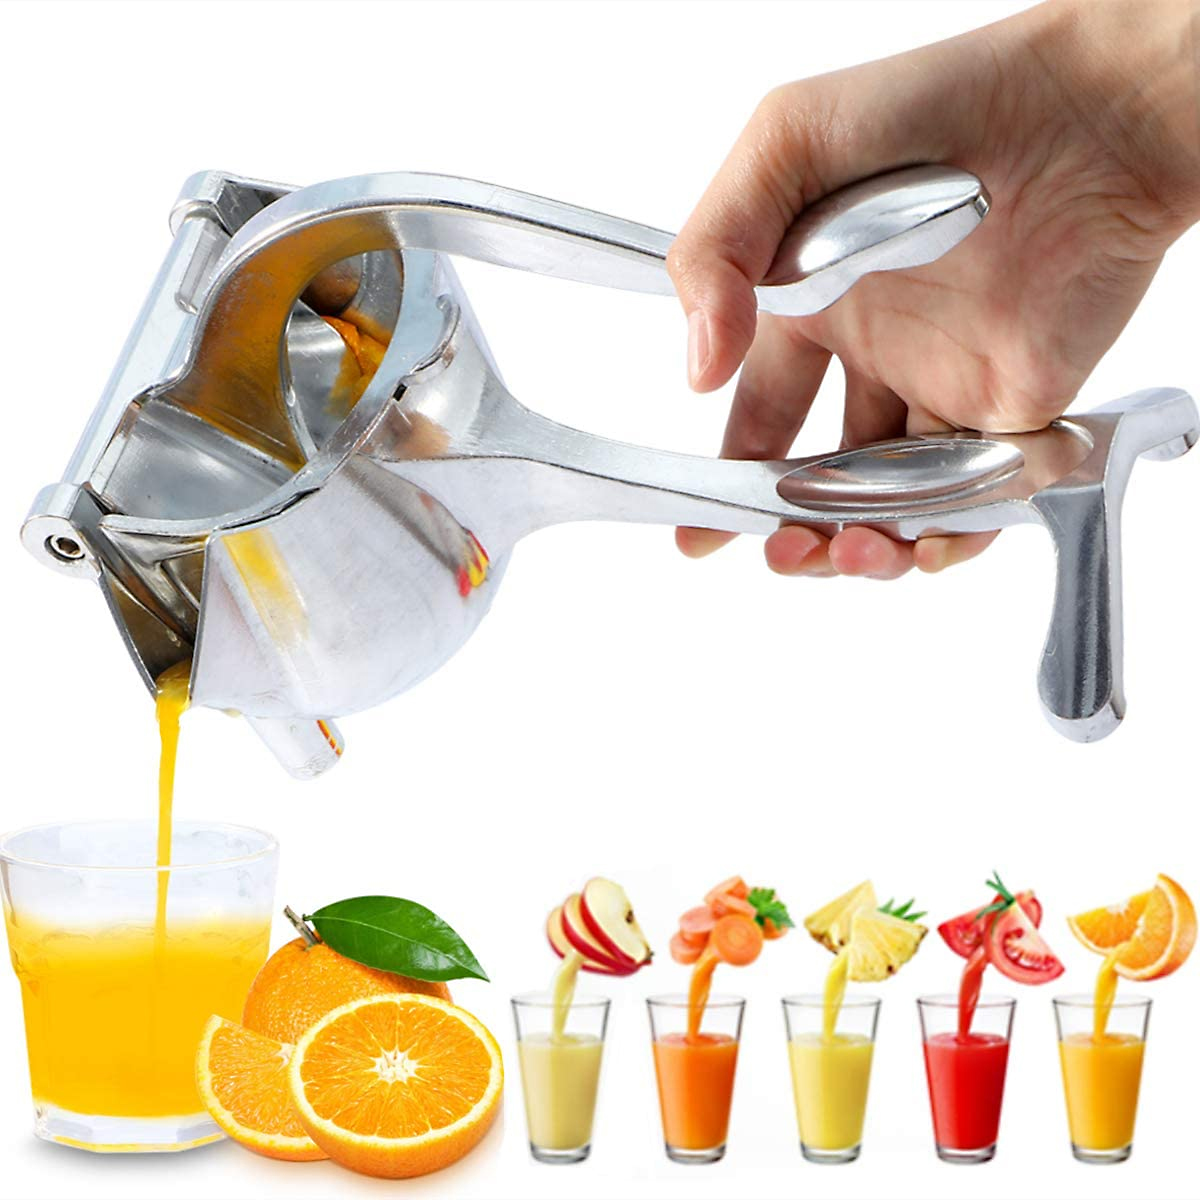 Lemon-Orange-Fruit-Juicer-Manual-Juice-Squeezer-Hand-Press-Machine-Kitchen-Home-1794089-2